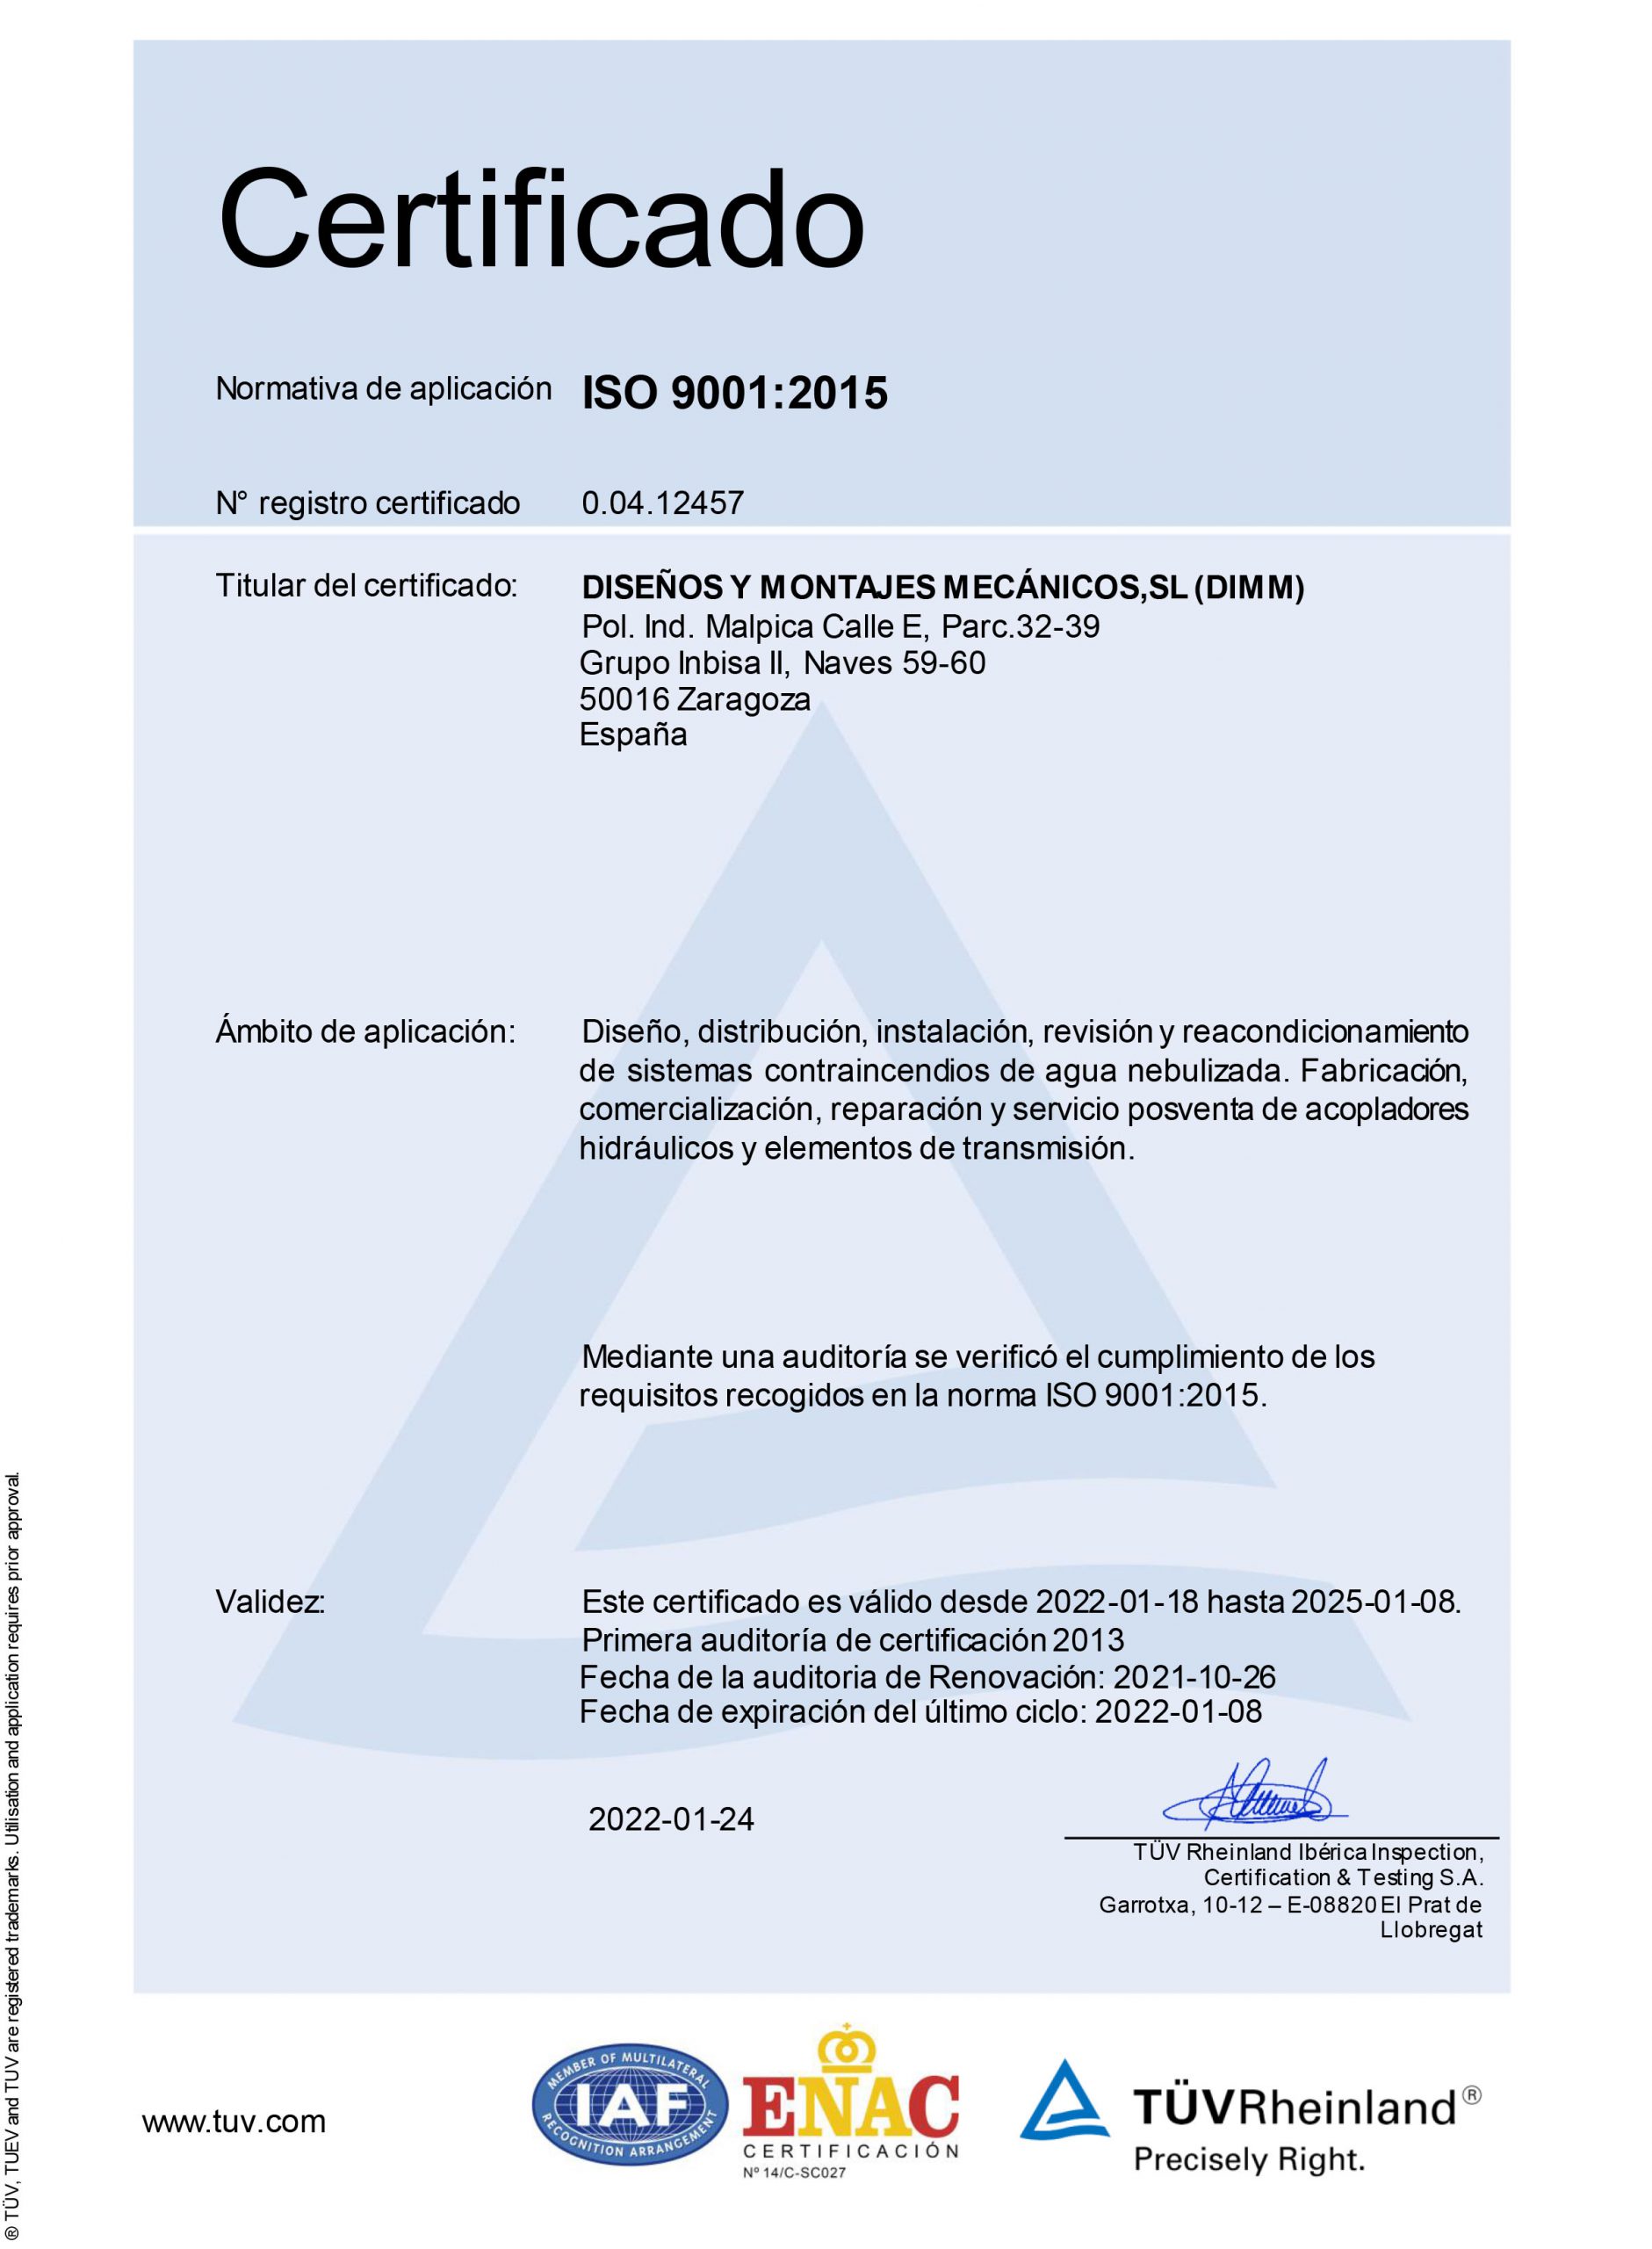 Certificado ISO 9001-2015 DIMM